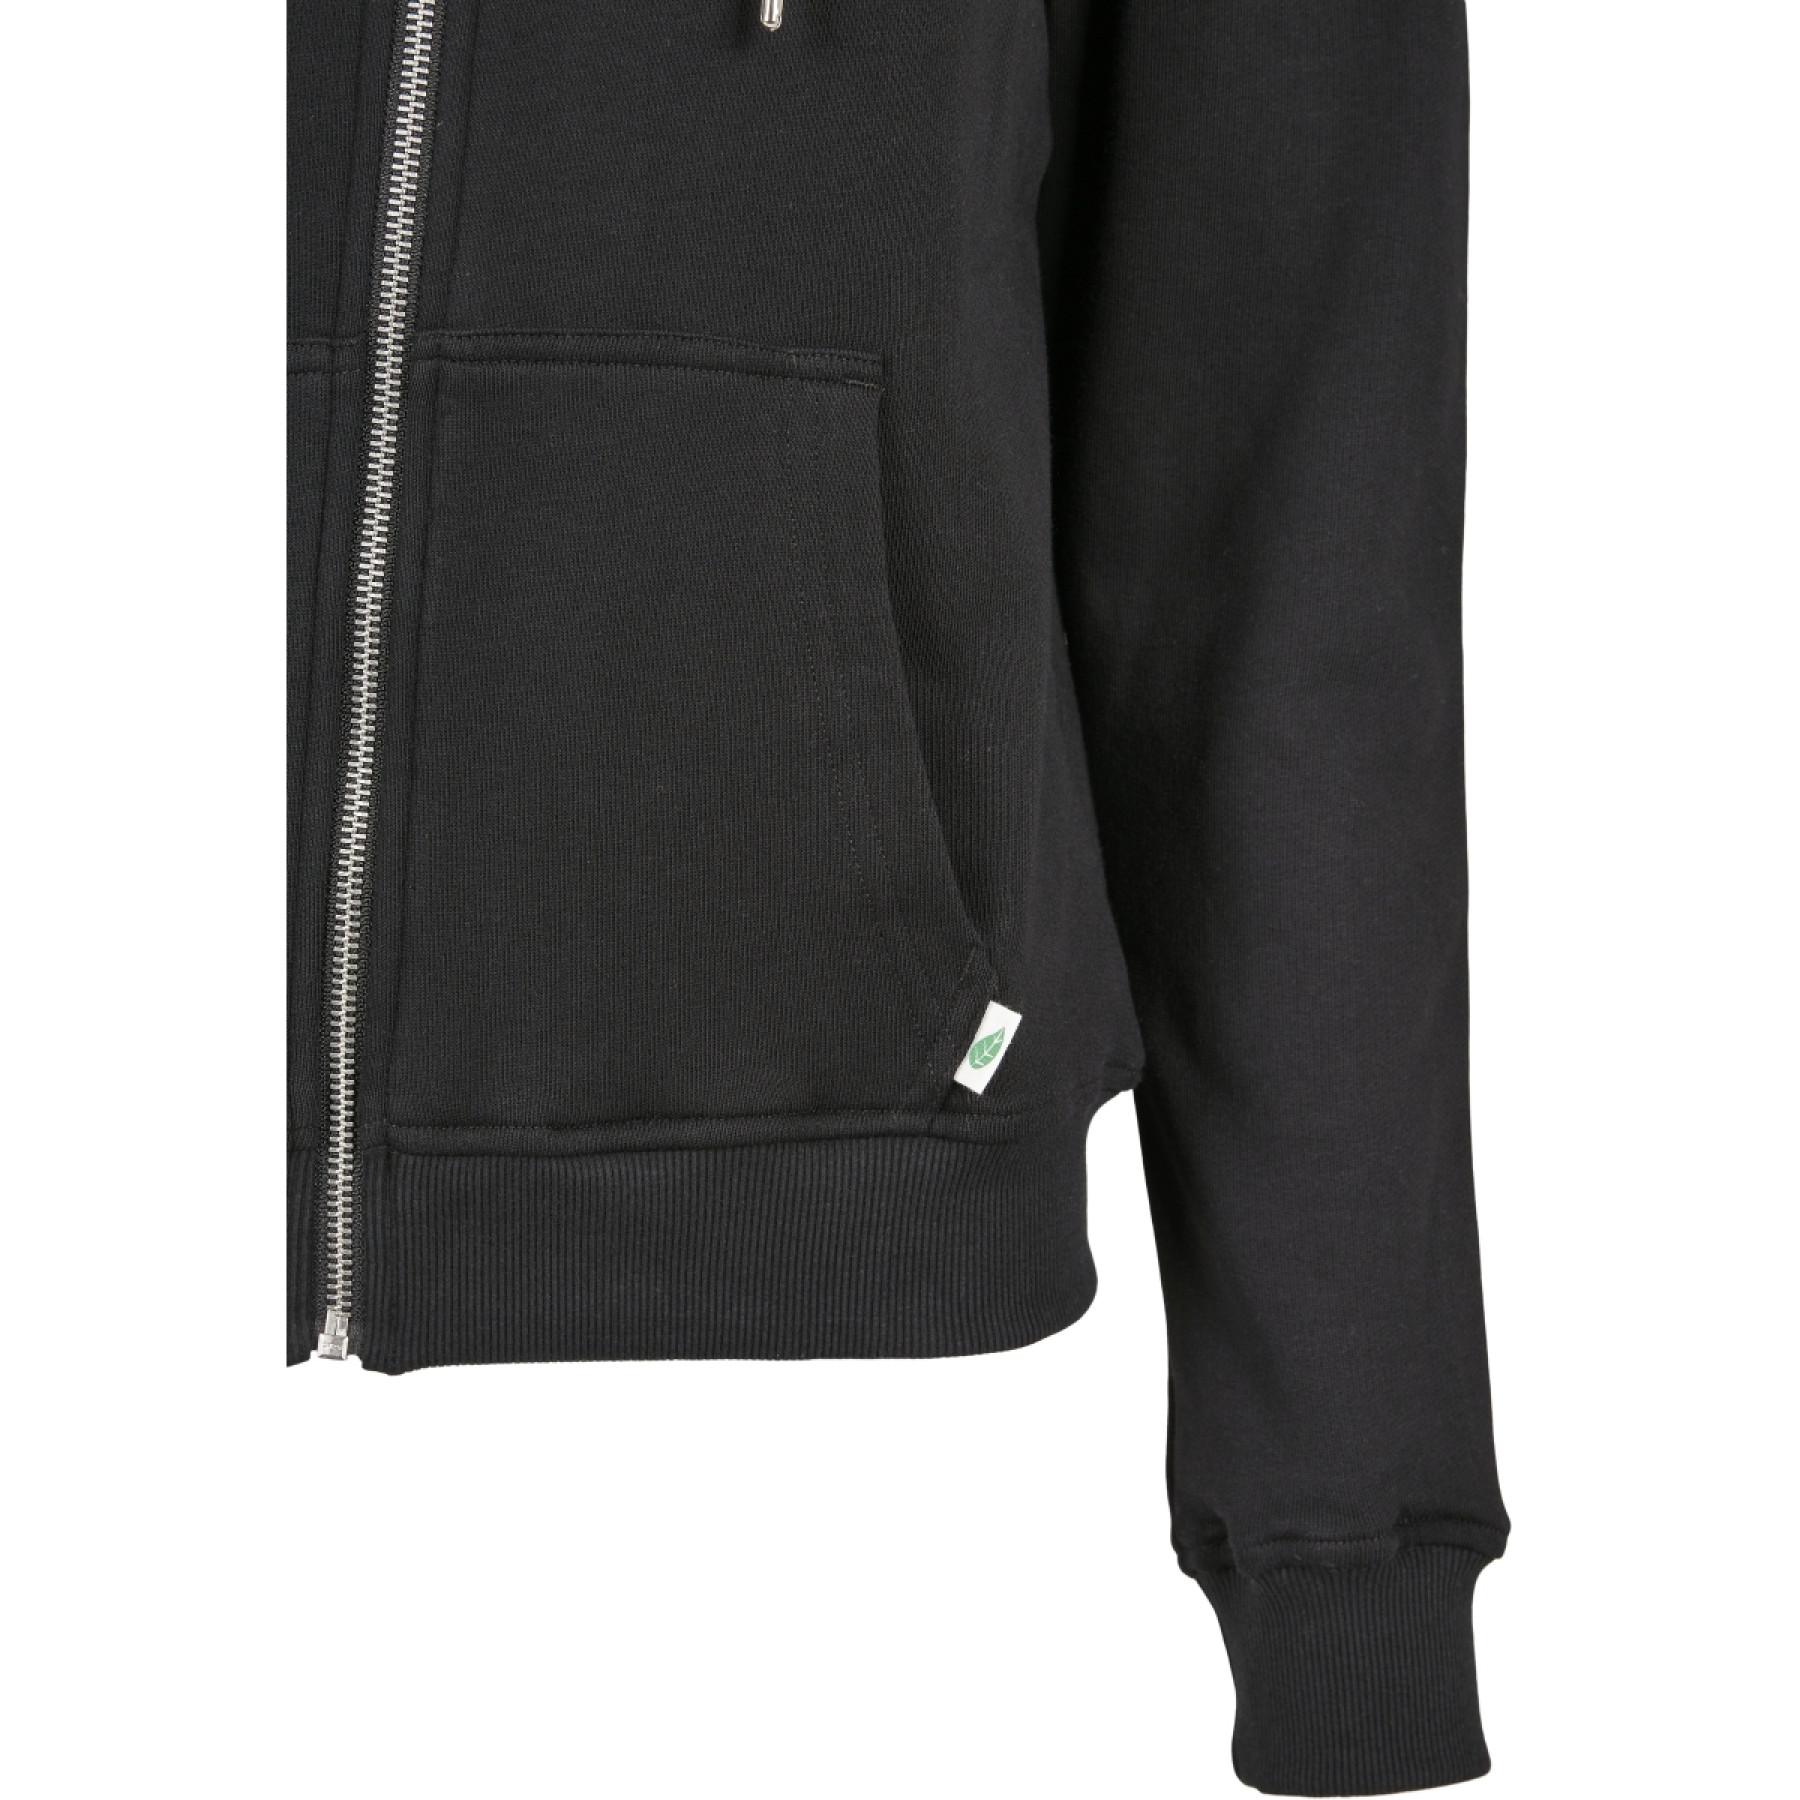 Women's hooded sweatshirt Urban Classics organic terry zip